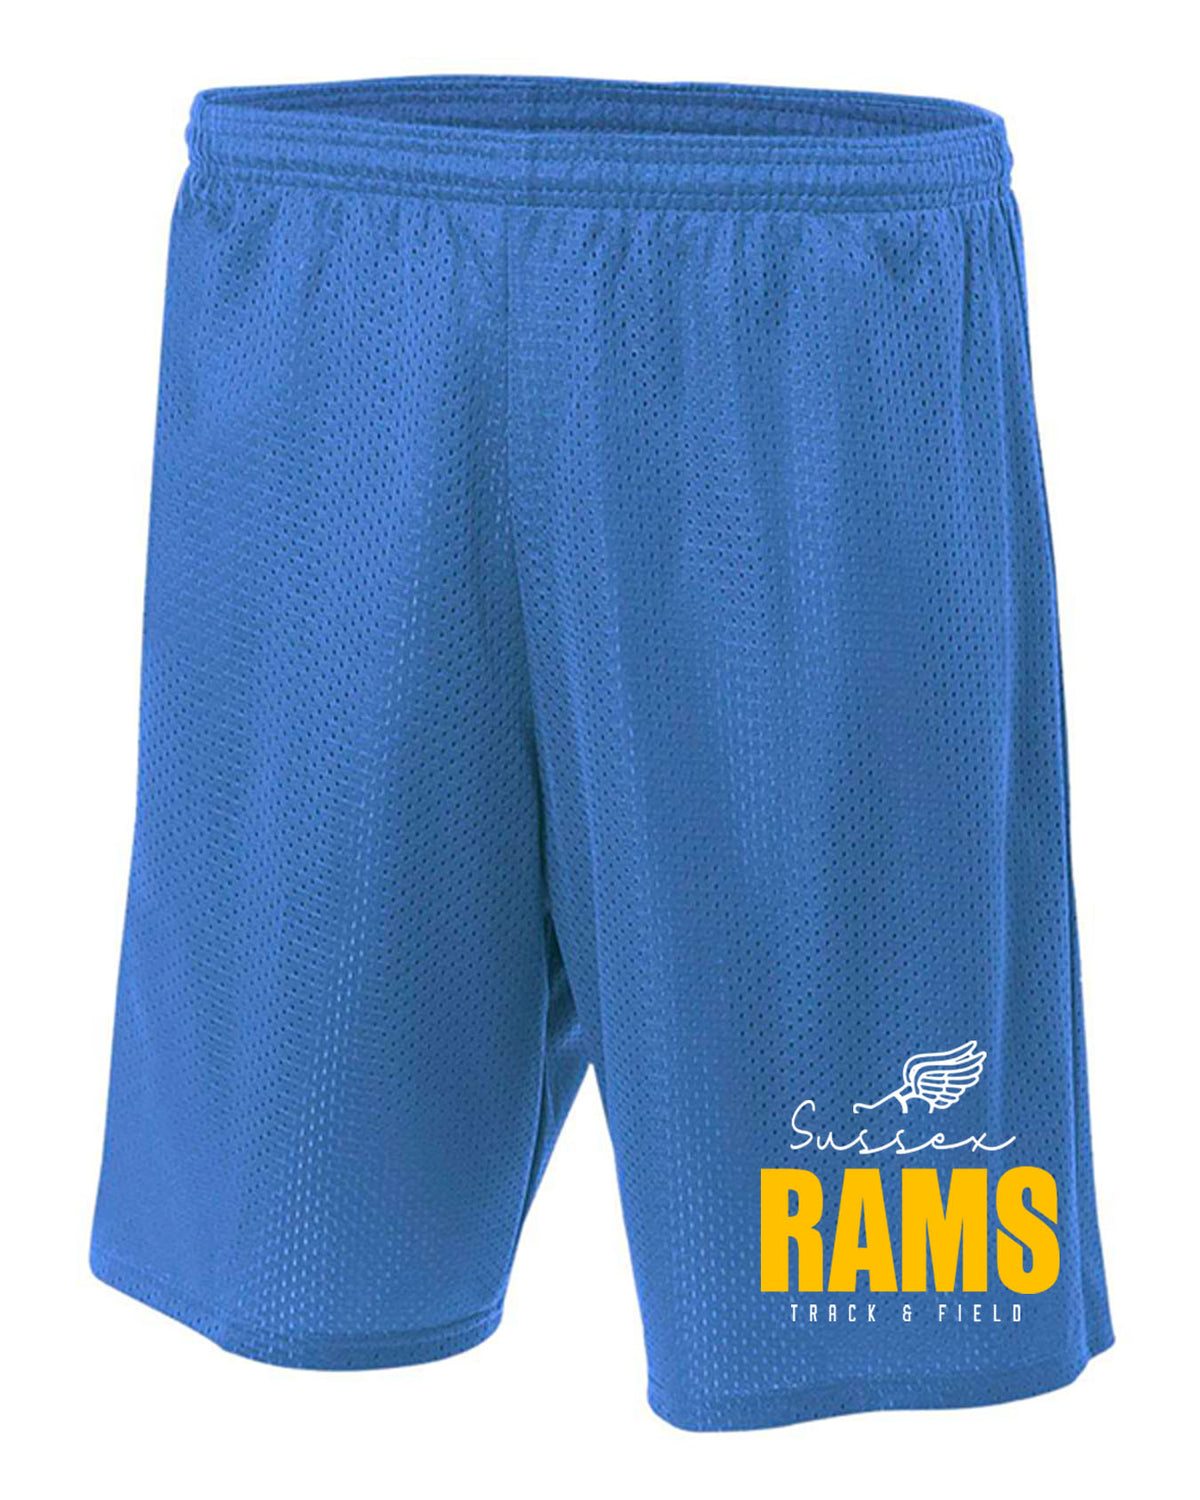 Sussex Rams Track Mesh Shorts Design 4